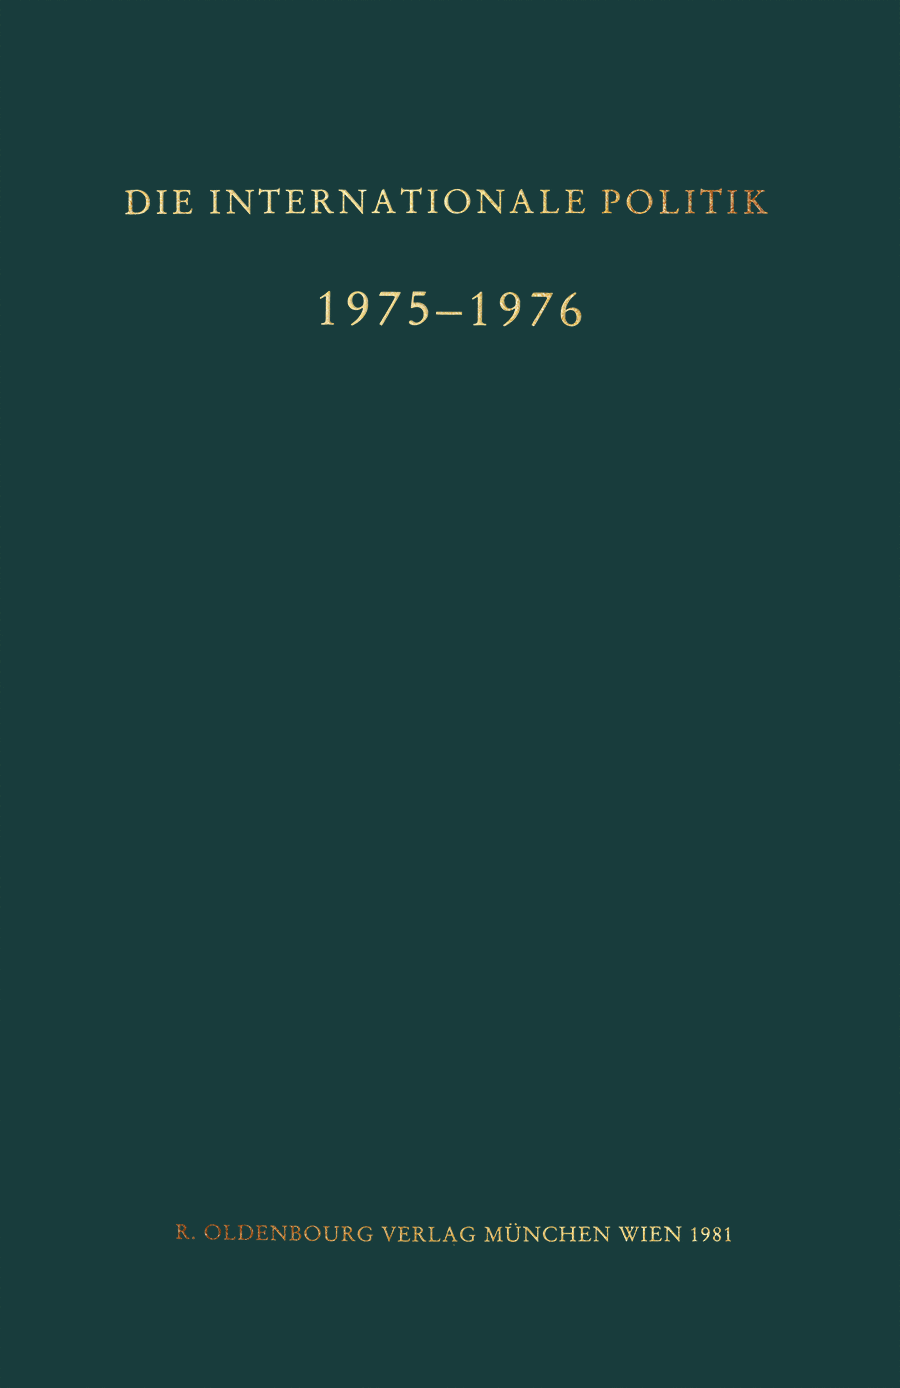 Die Internationale Politik 1975-1976, issue 1975-1976, 1981, p. 296-313;